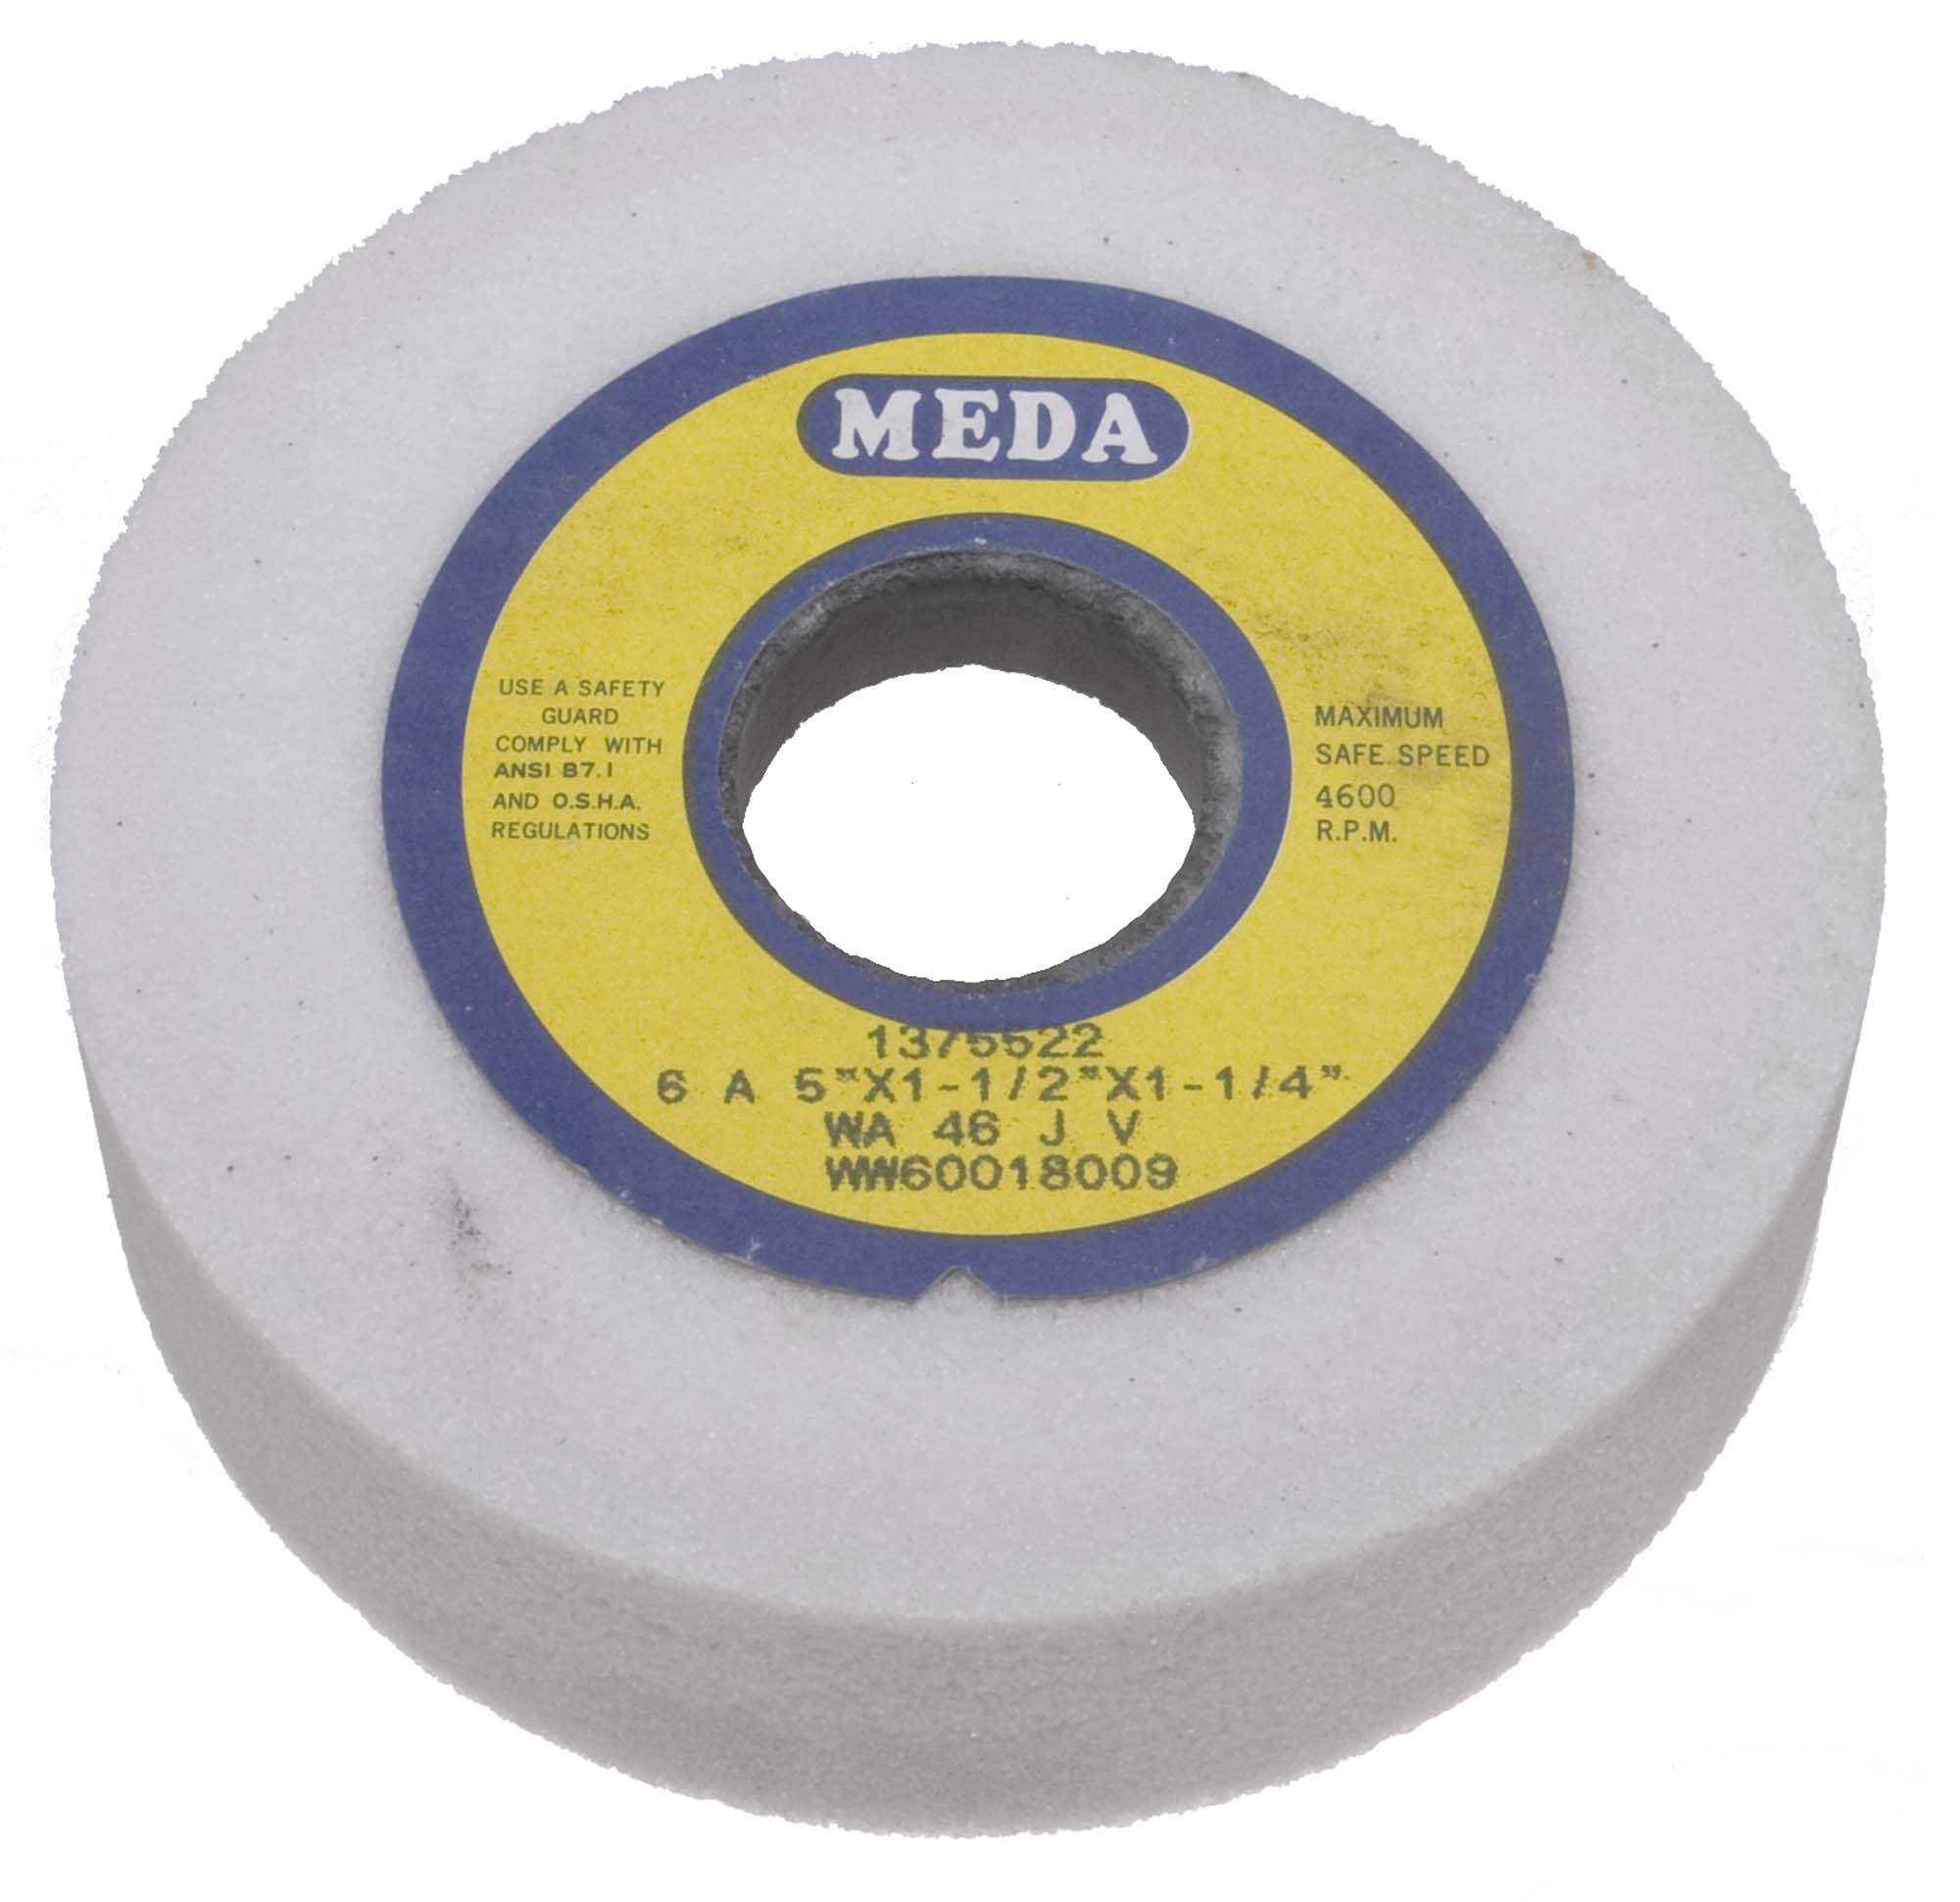 Meda 5 x 1-1/2 x 1-1/4 46J Straight Cup White Aluminum Oxide Grinding Wheel